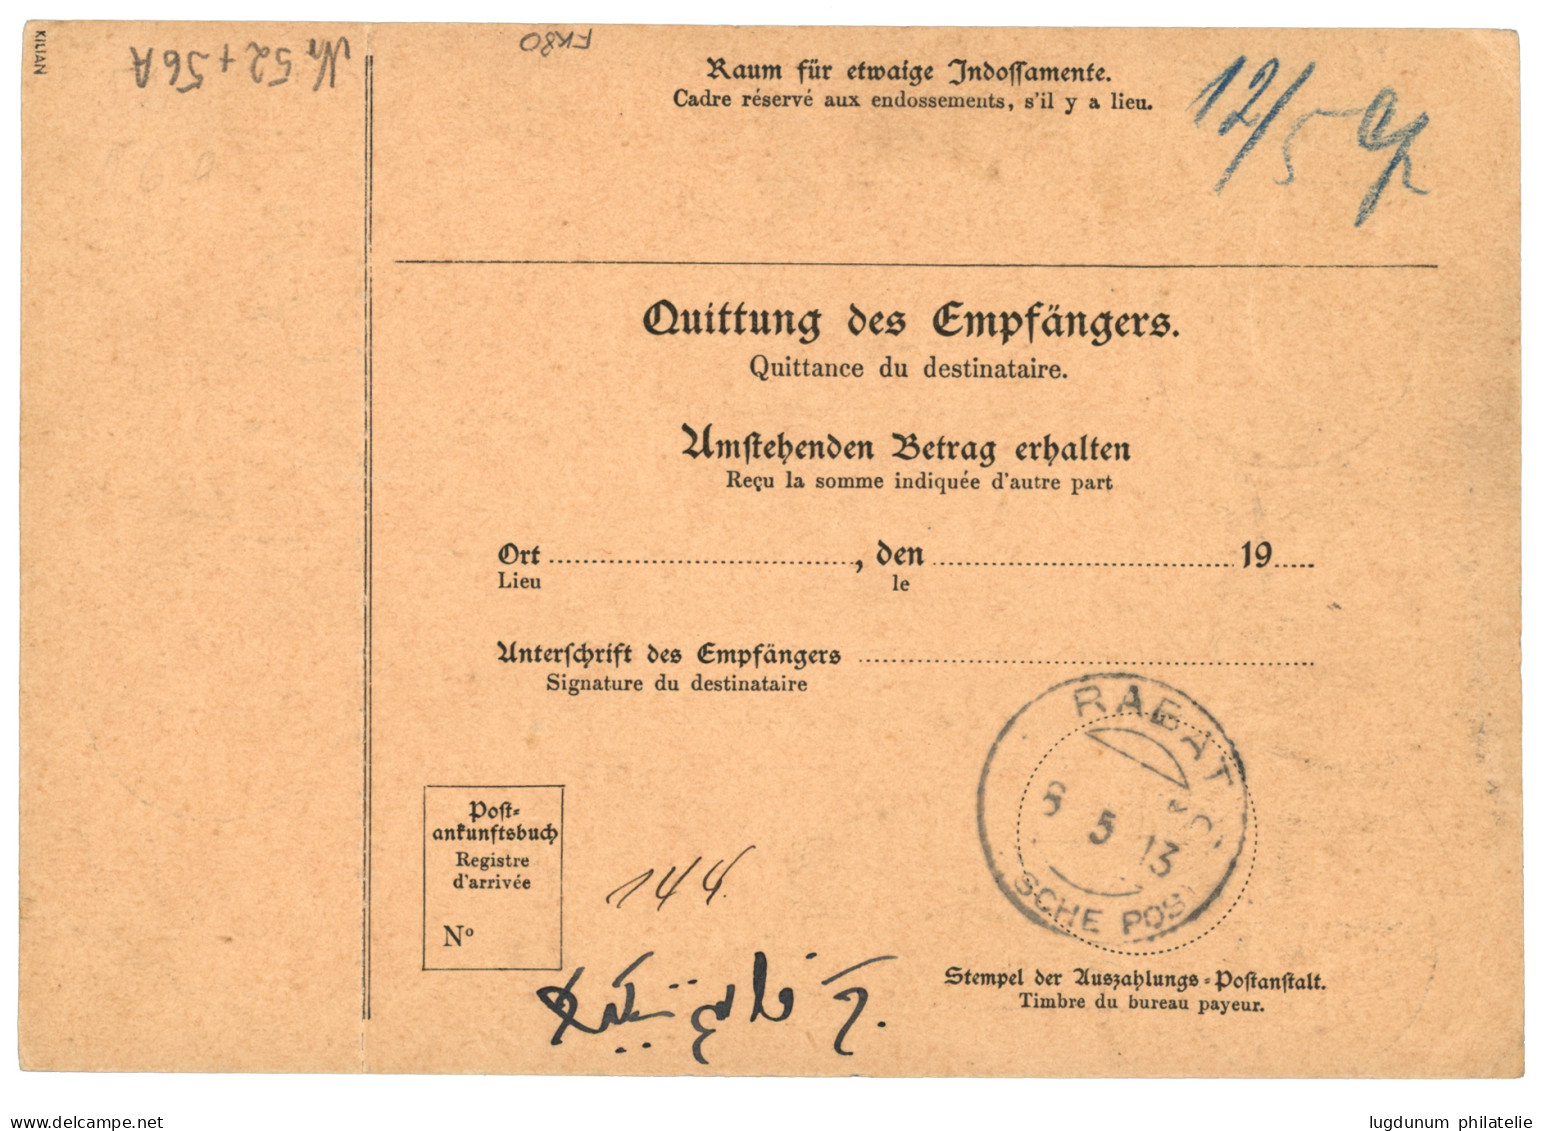 GERMAN MOROCCO : 1913 2P50c on 2 MARK + 50c on 40pf canc. TANGER on MANDAT POSTE INTERNATIONAL to RABAT. Signed KILIAN. 